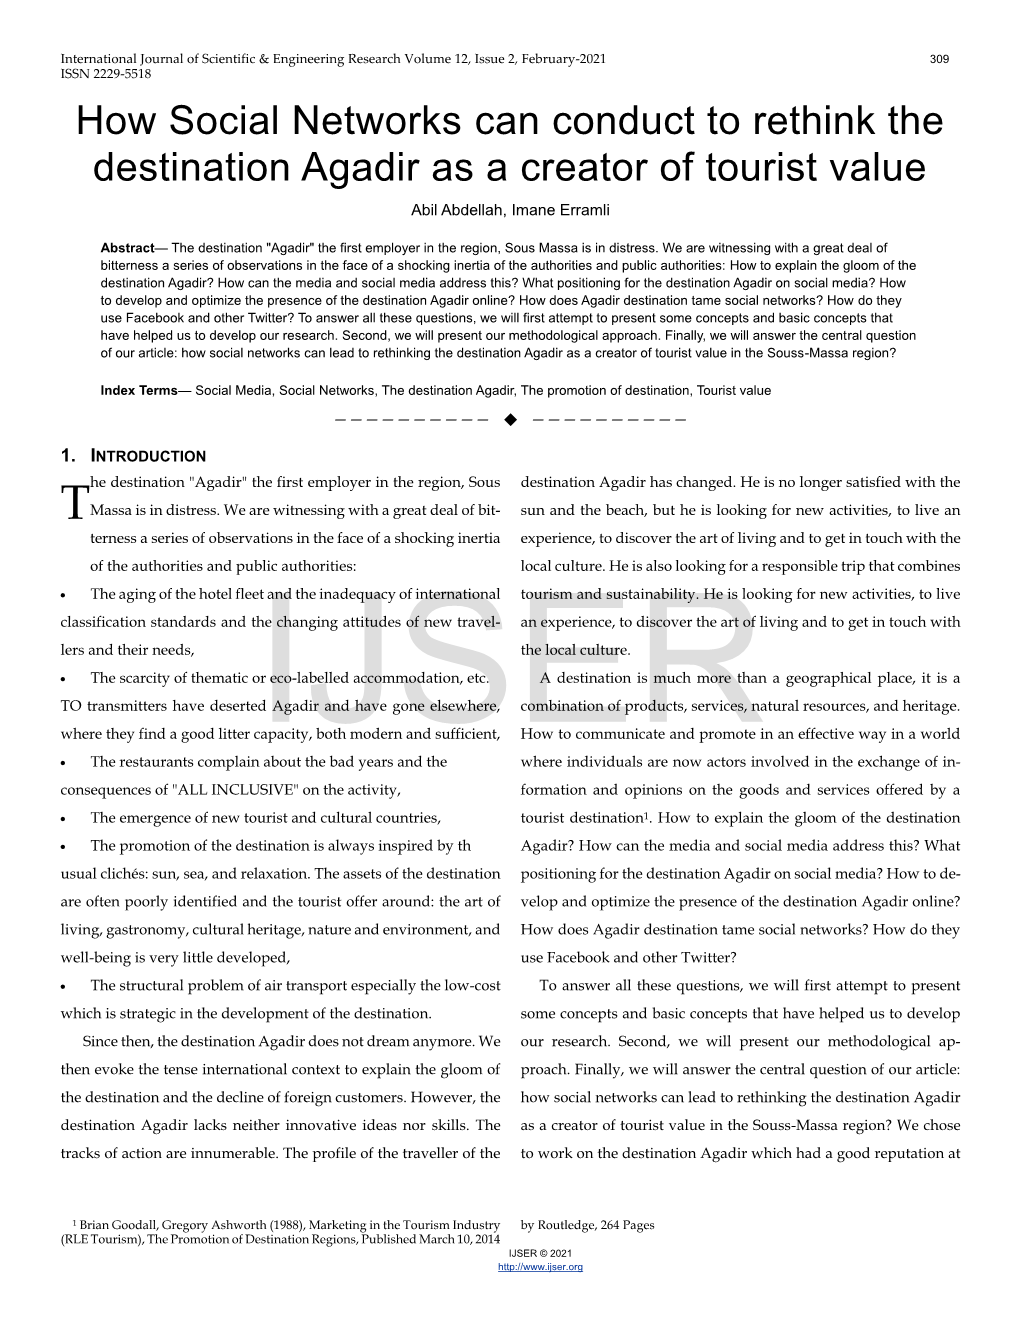 How Social Networks Can Conduct to Rethink the Destination Agadir As a Creator of Tourist Value Abil Abdellah, Imane Erramli